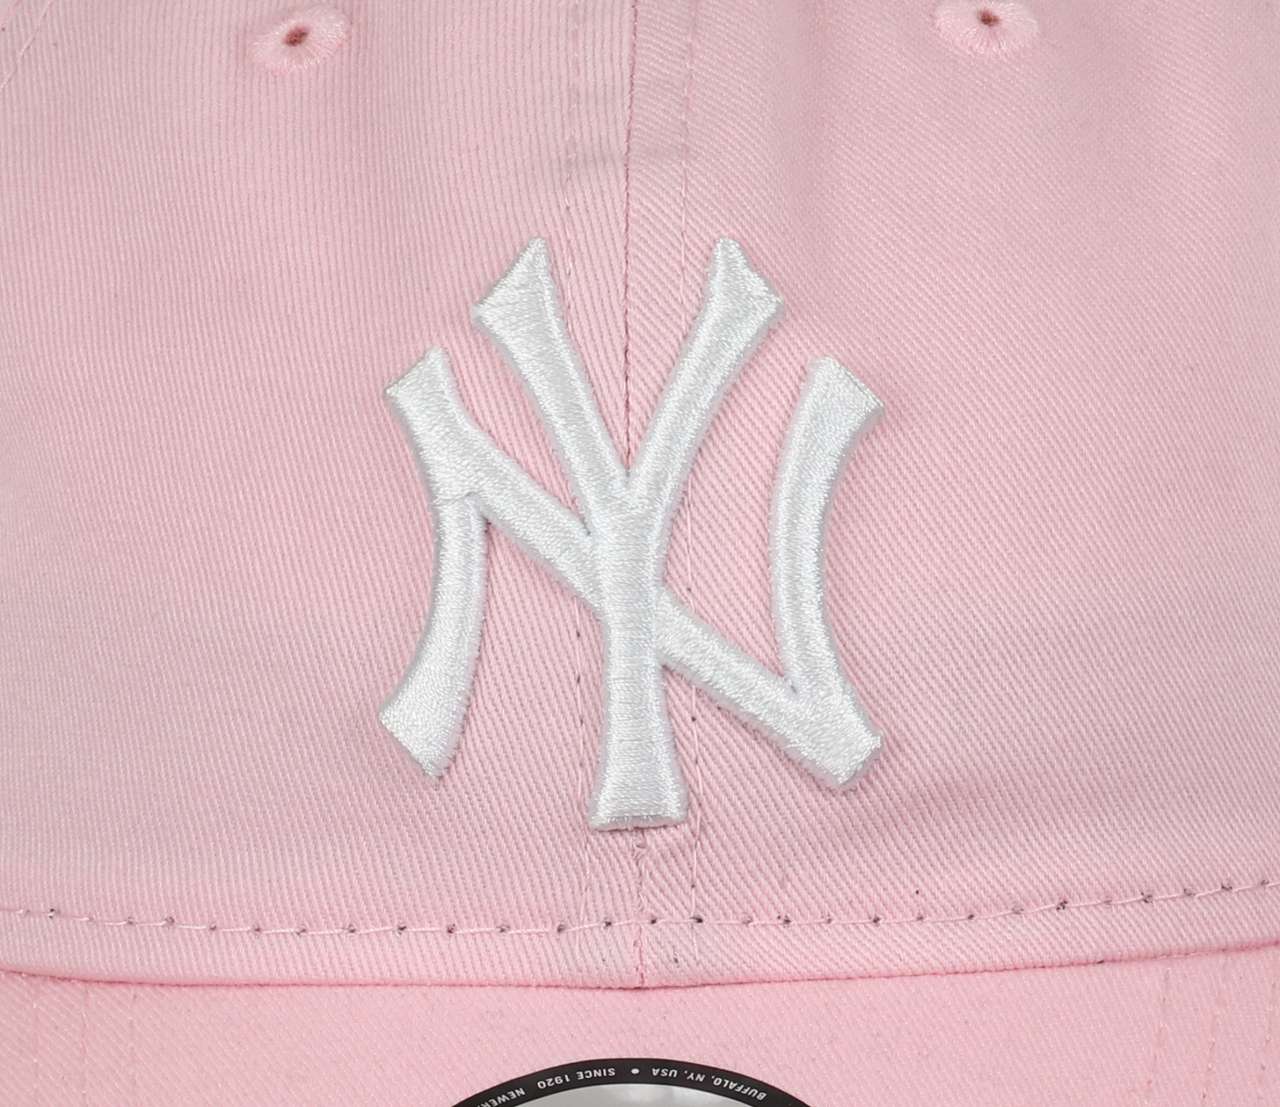 New York Yankees MLB Team Pink 9Twenty Unstructured Strapback Cap New Era